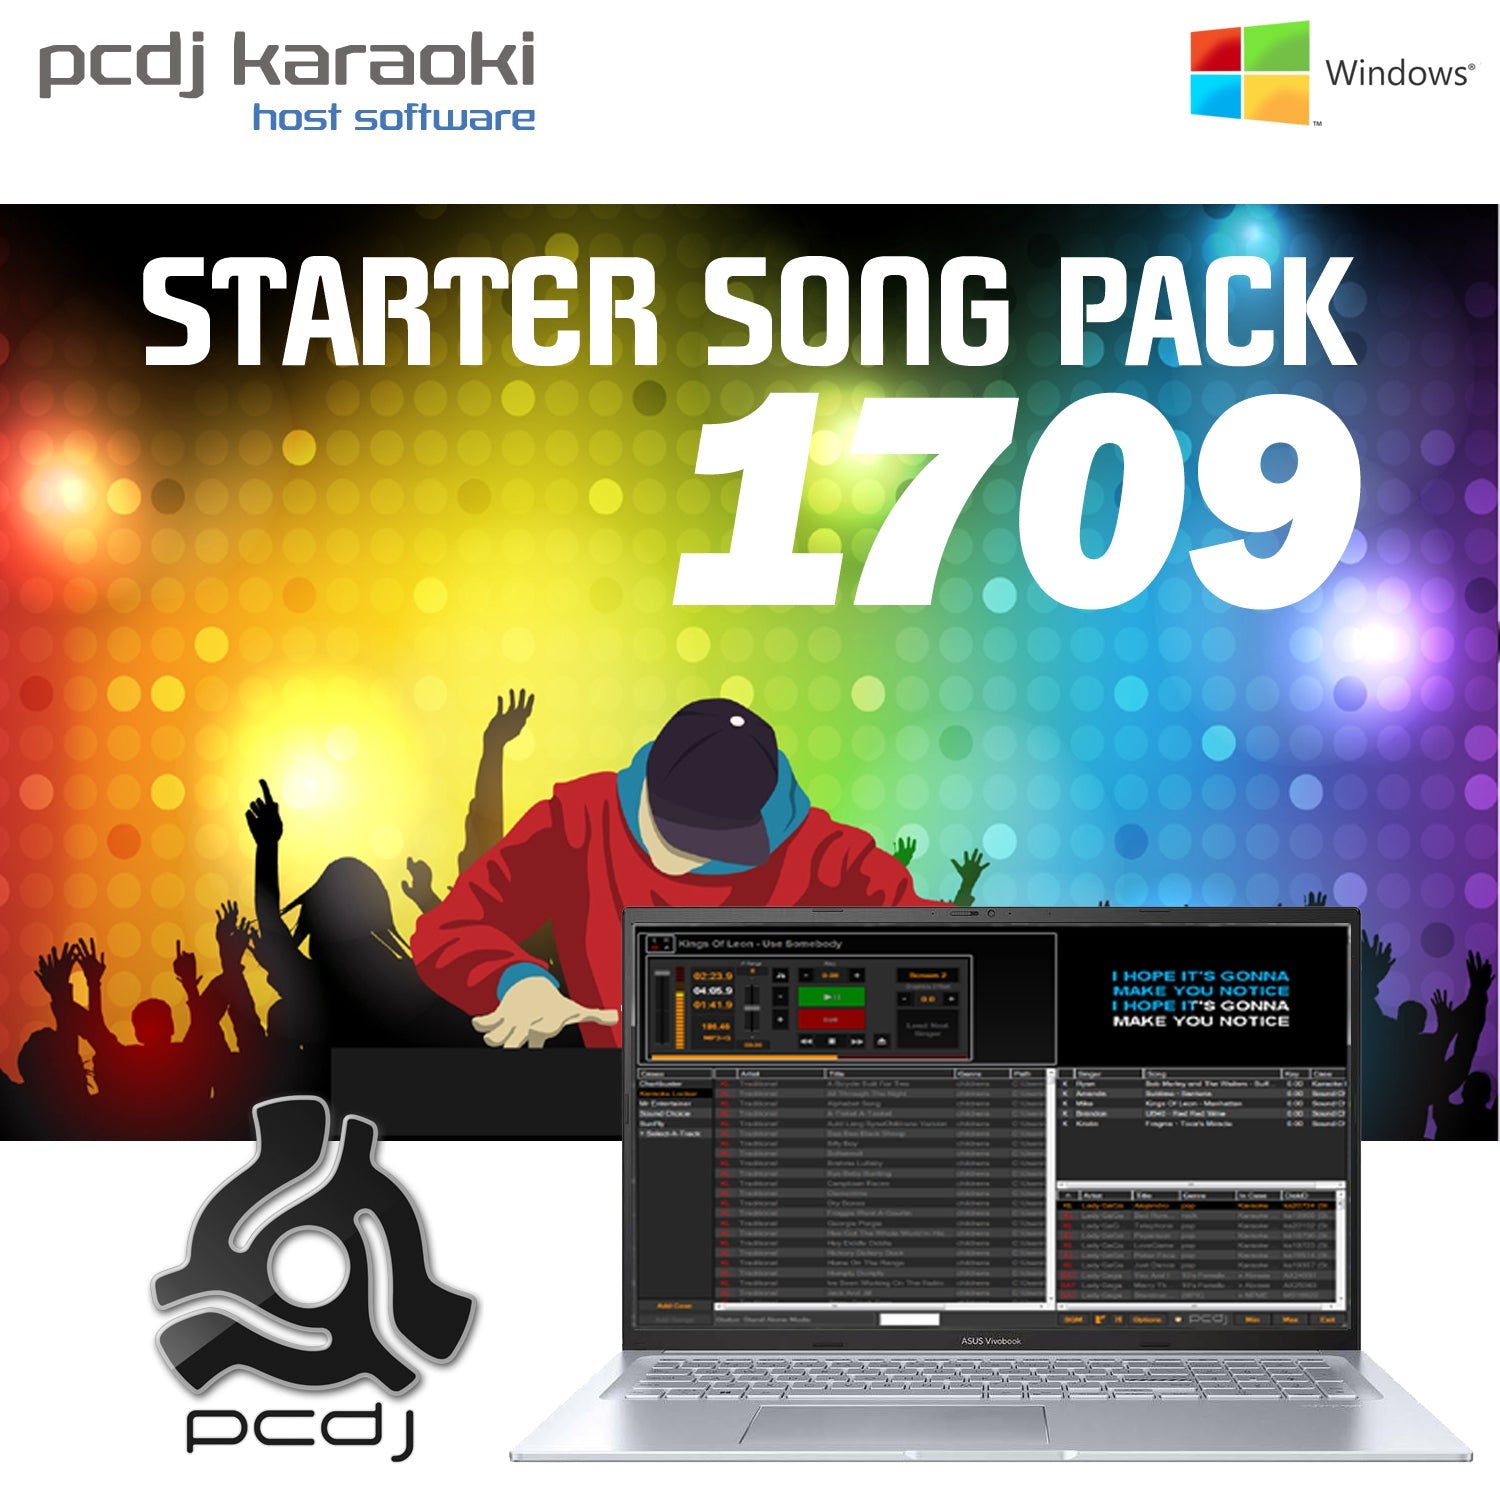 PCDJ Karaoki Hosting Software + 1709 Song Pack - Karaoke Home Entertainment